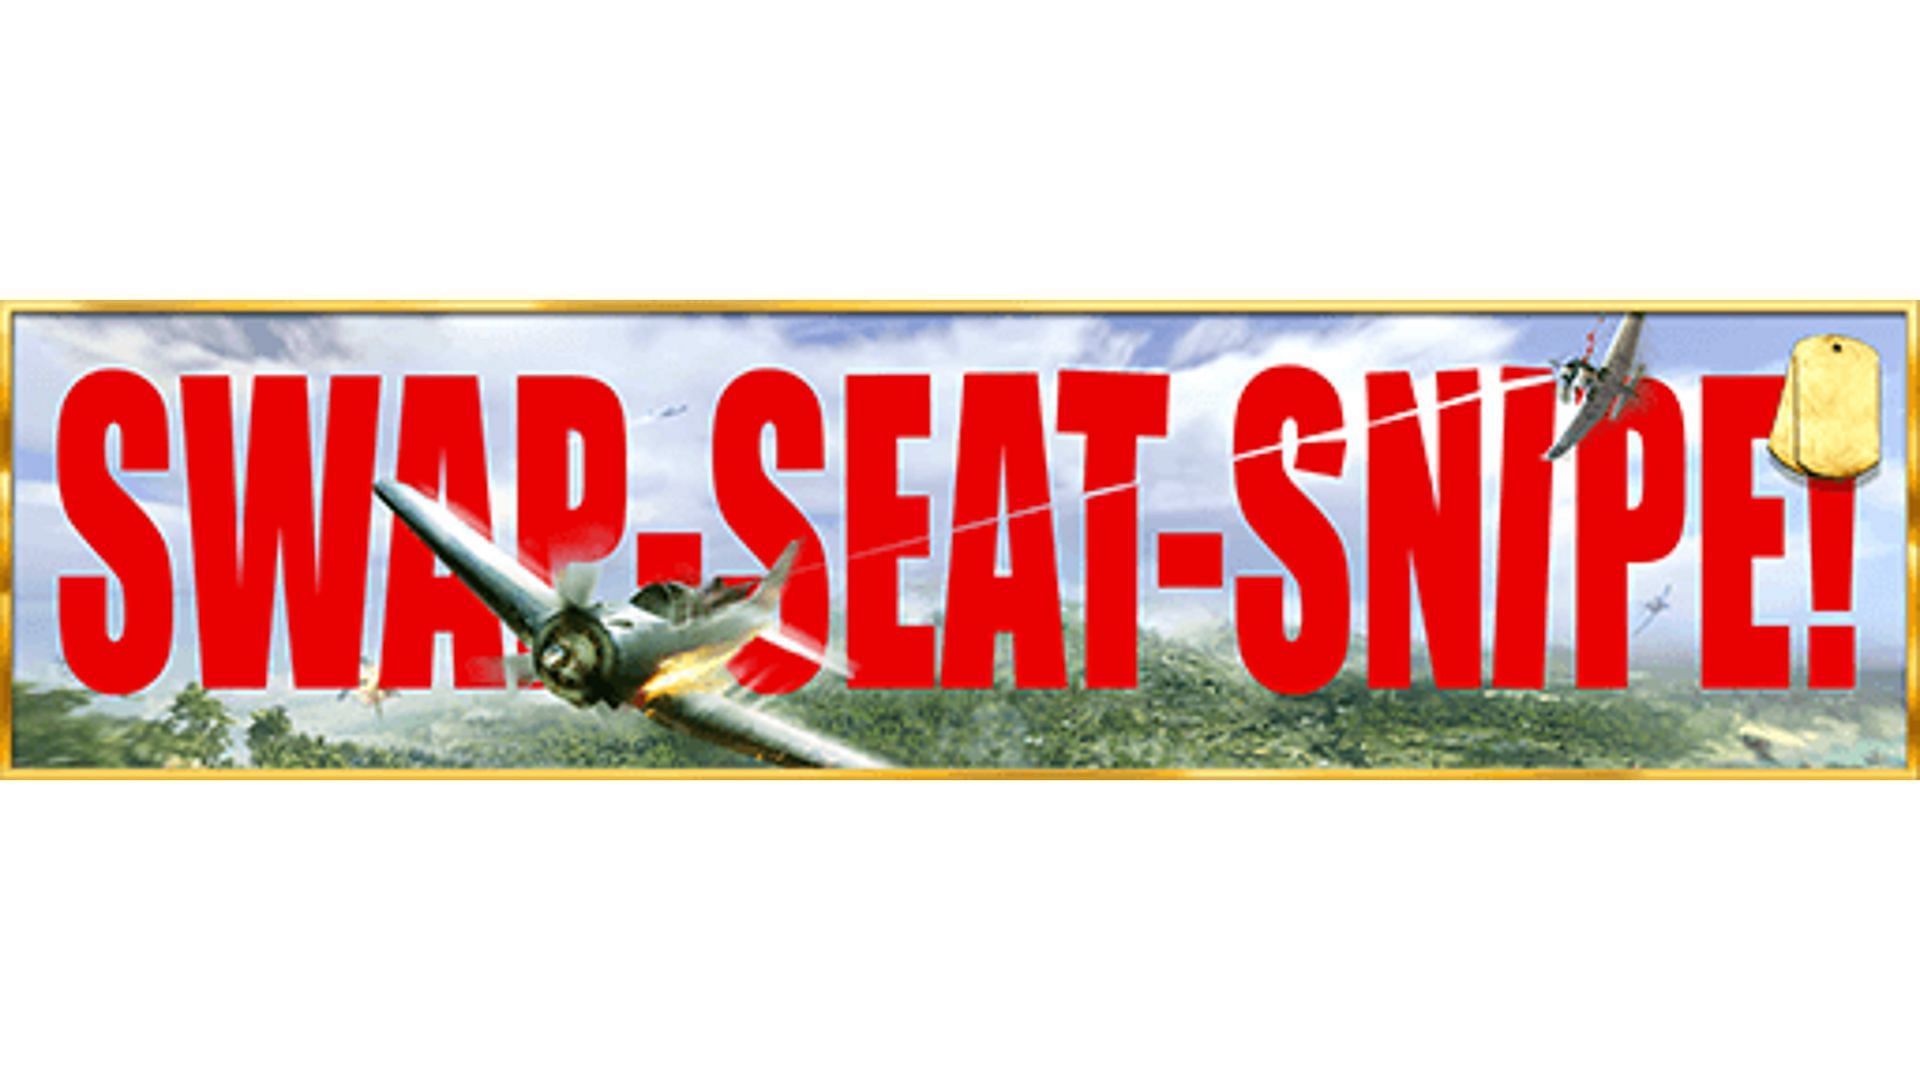 The &quot;Swap-Seat-Snipe!&quot; Calling Card reward (Image via Activision)